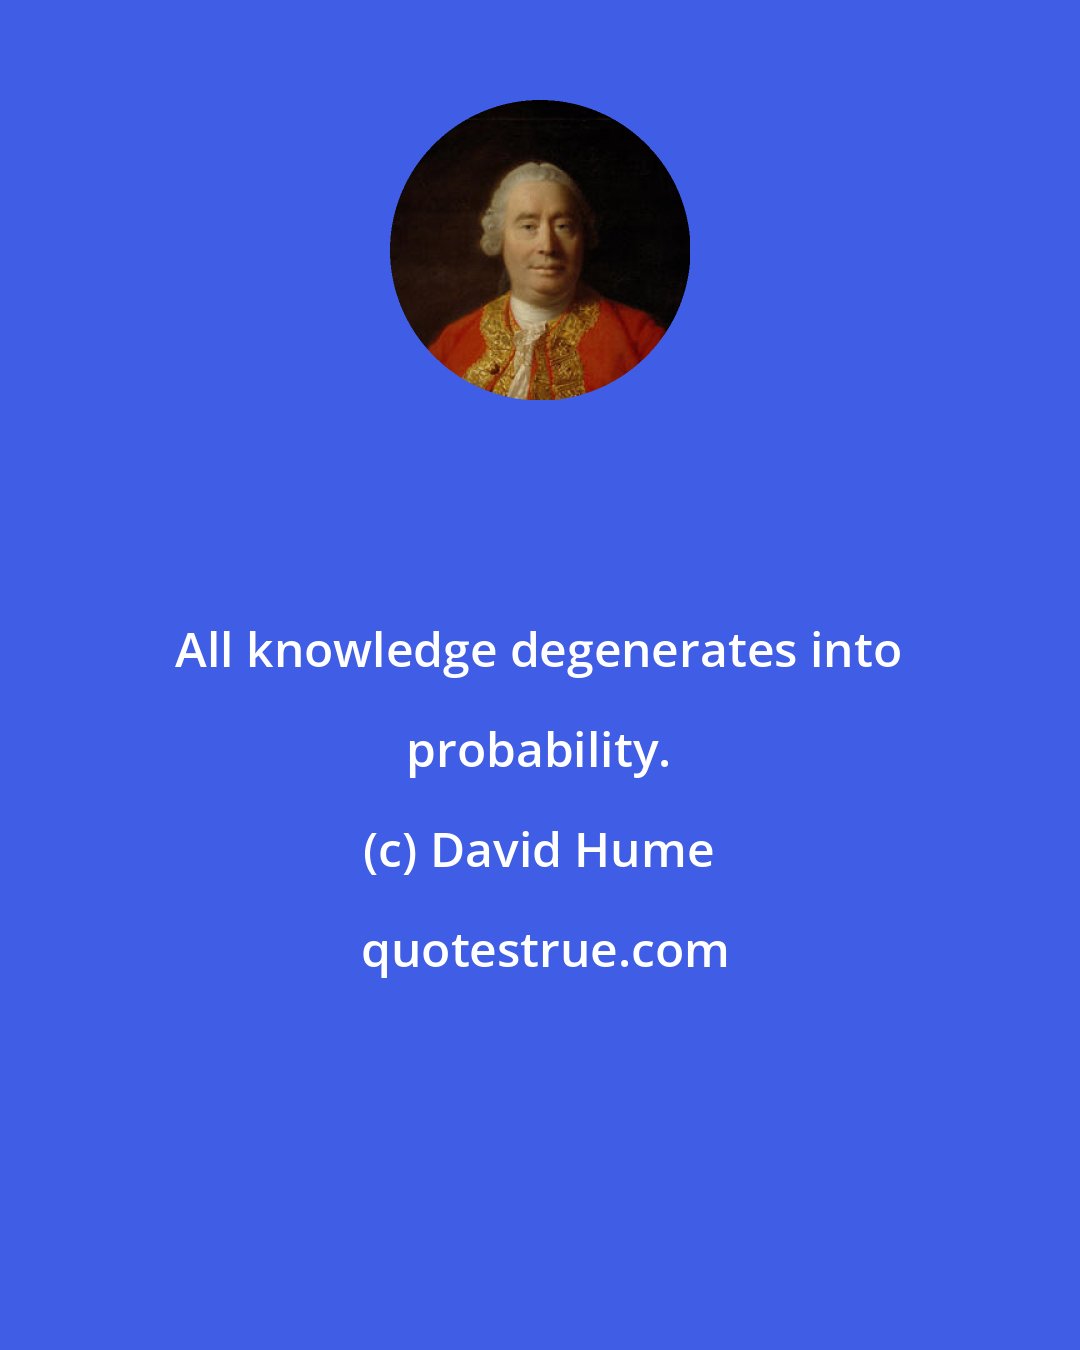 David Hume: All knowledge degenerates into probability.